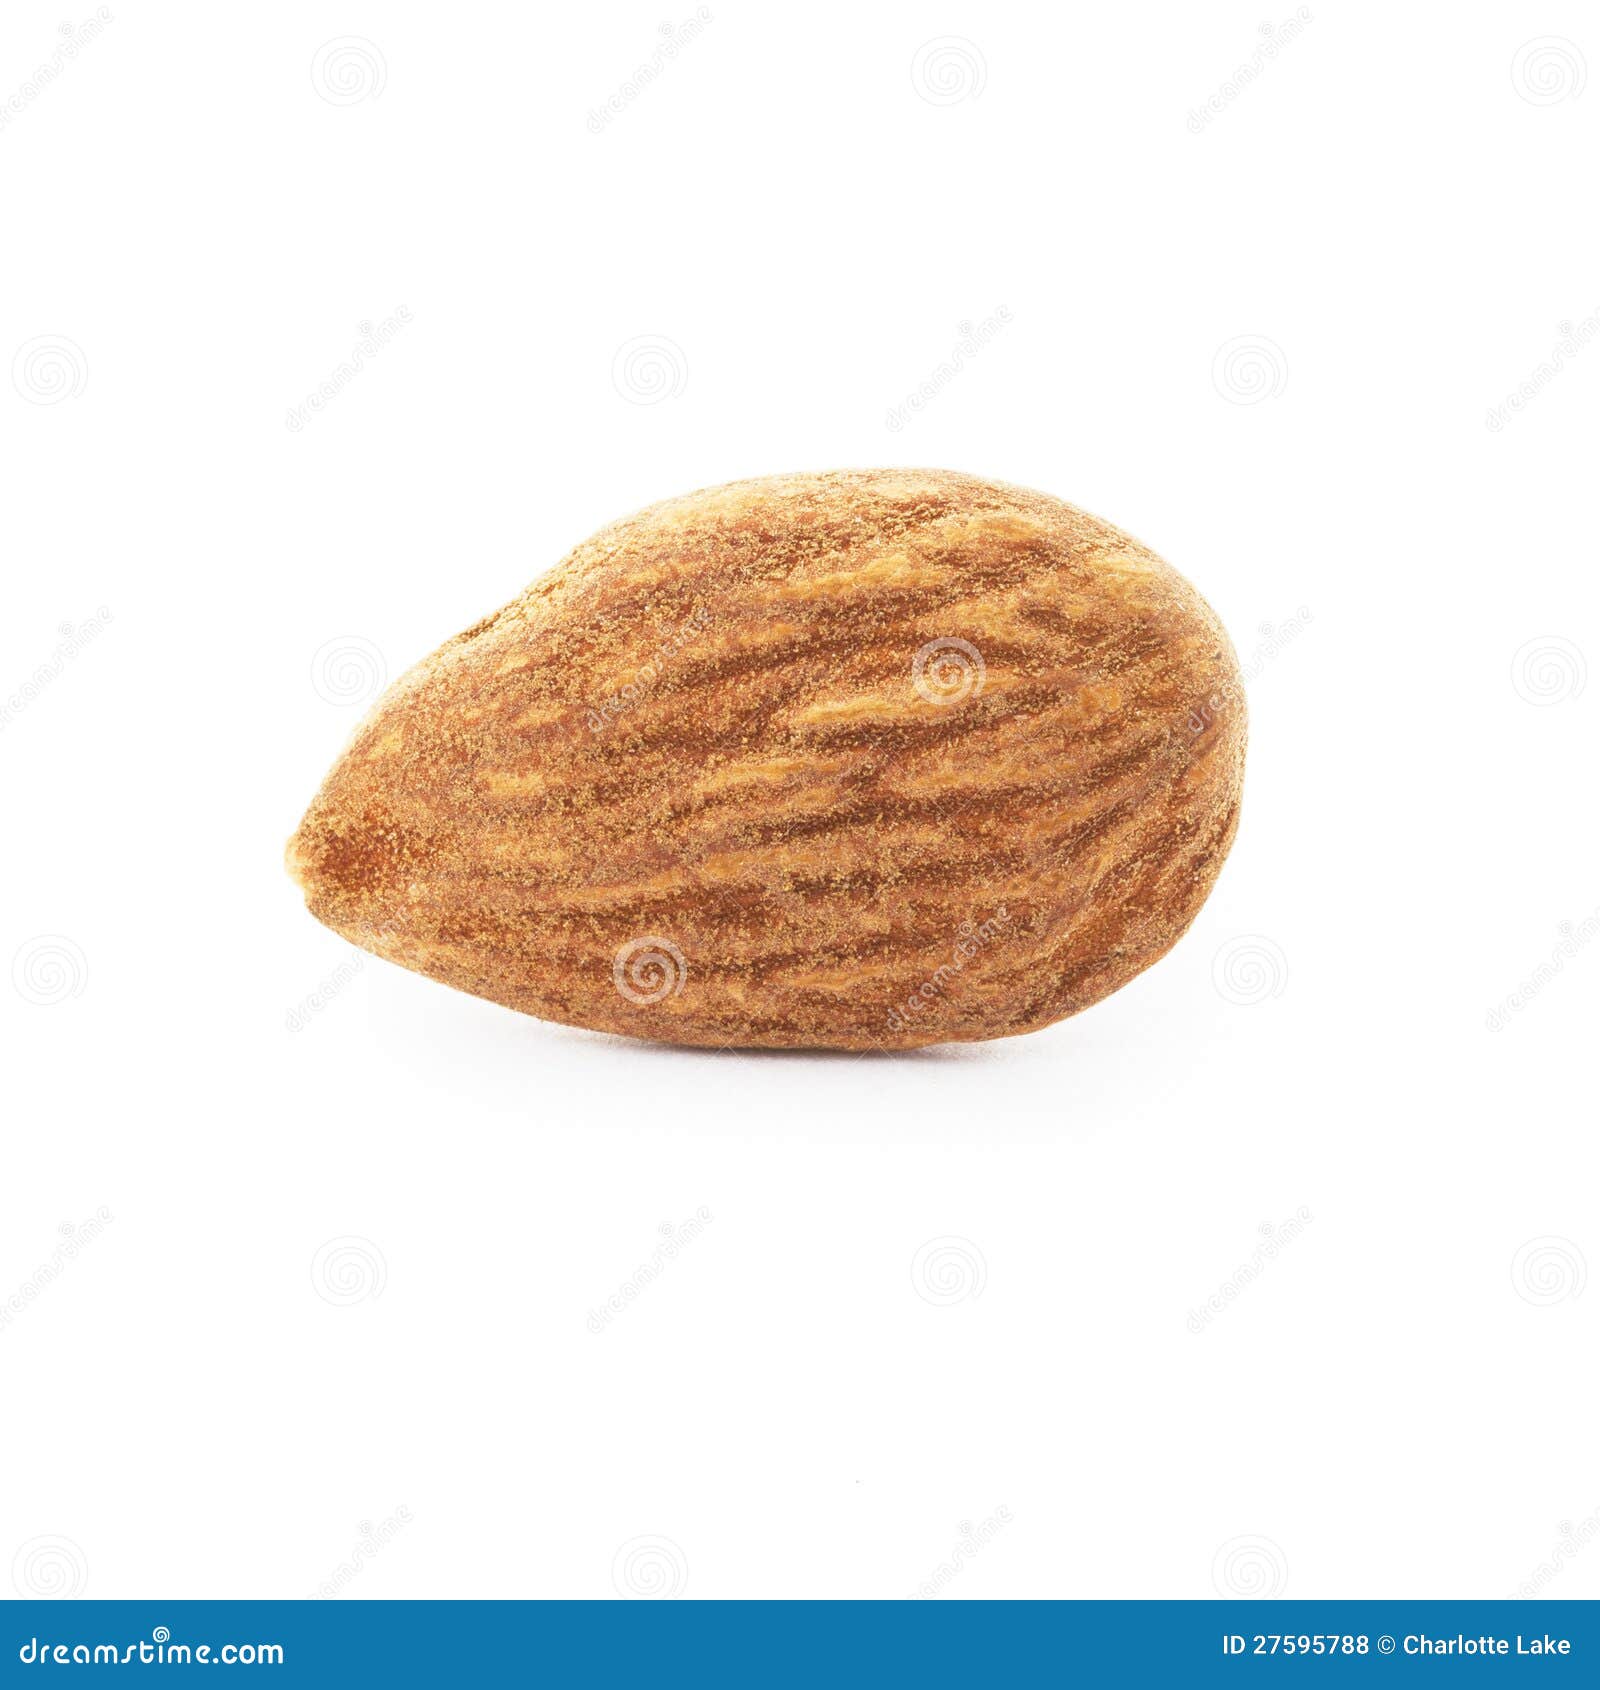 one-almond-27595788.jpg